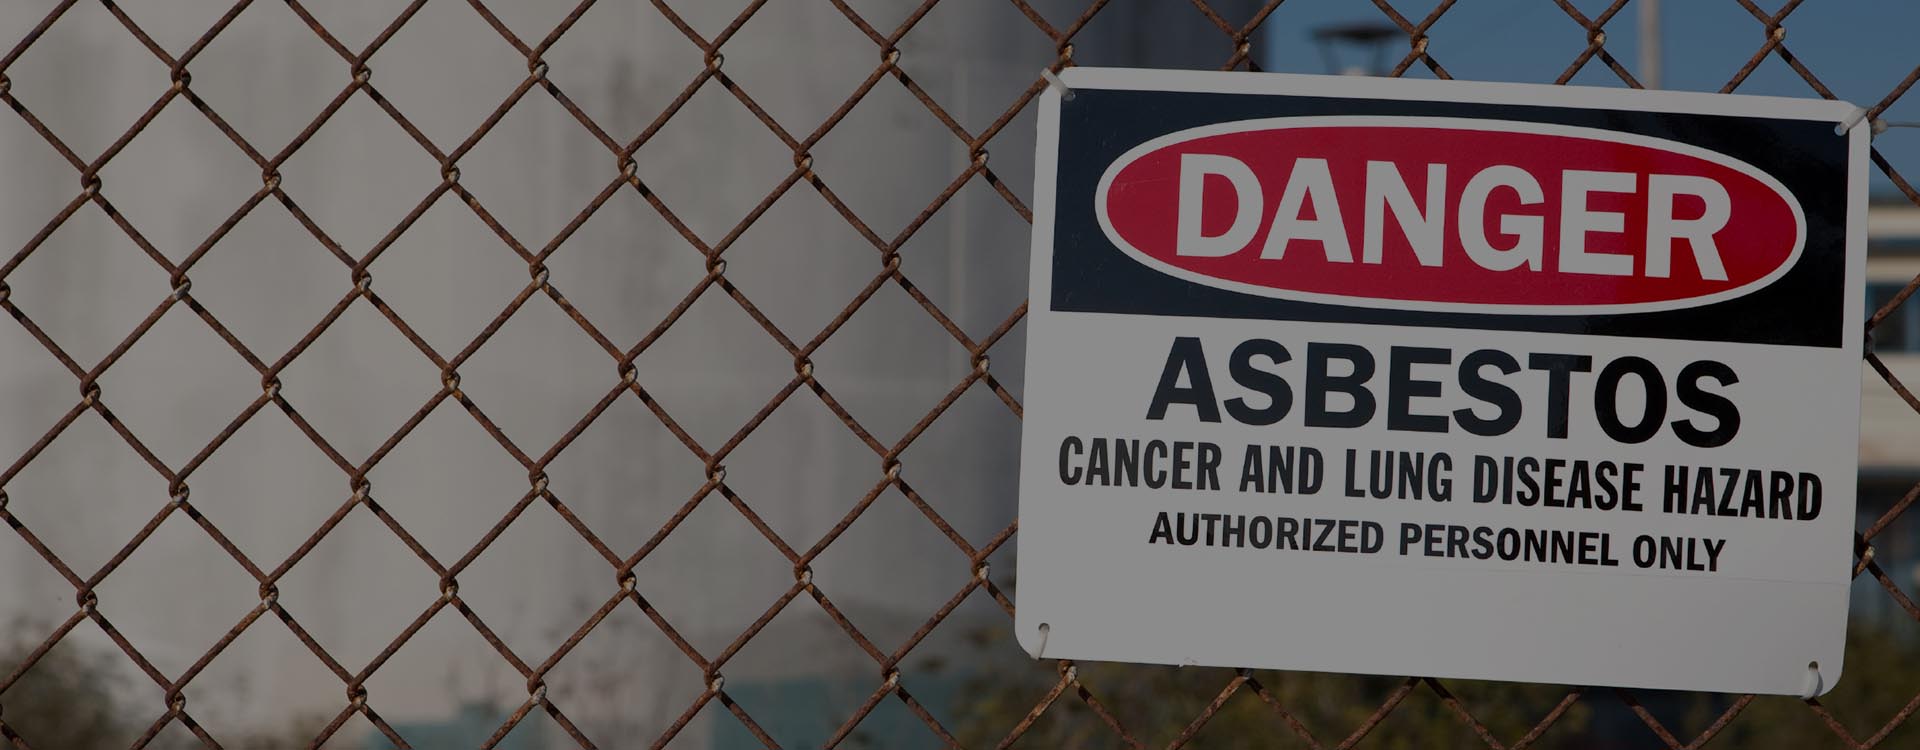 asbestosslide